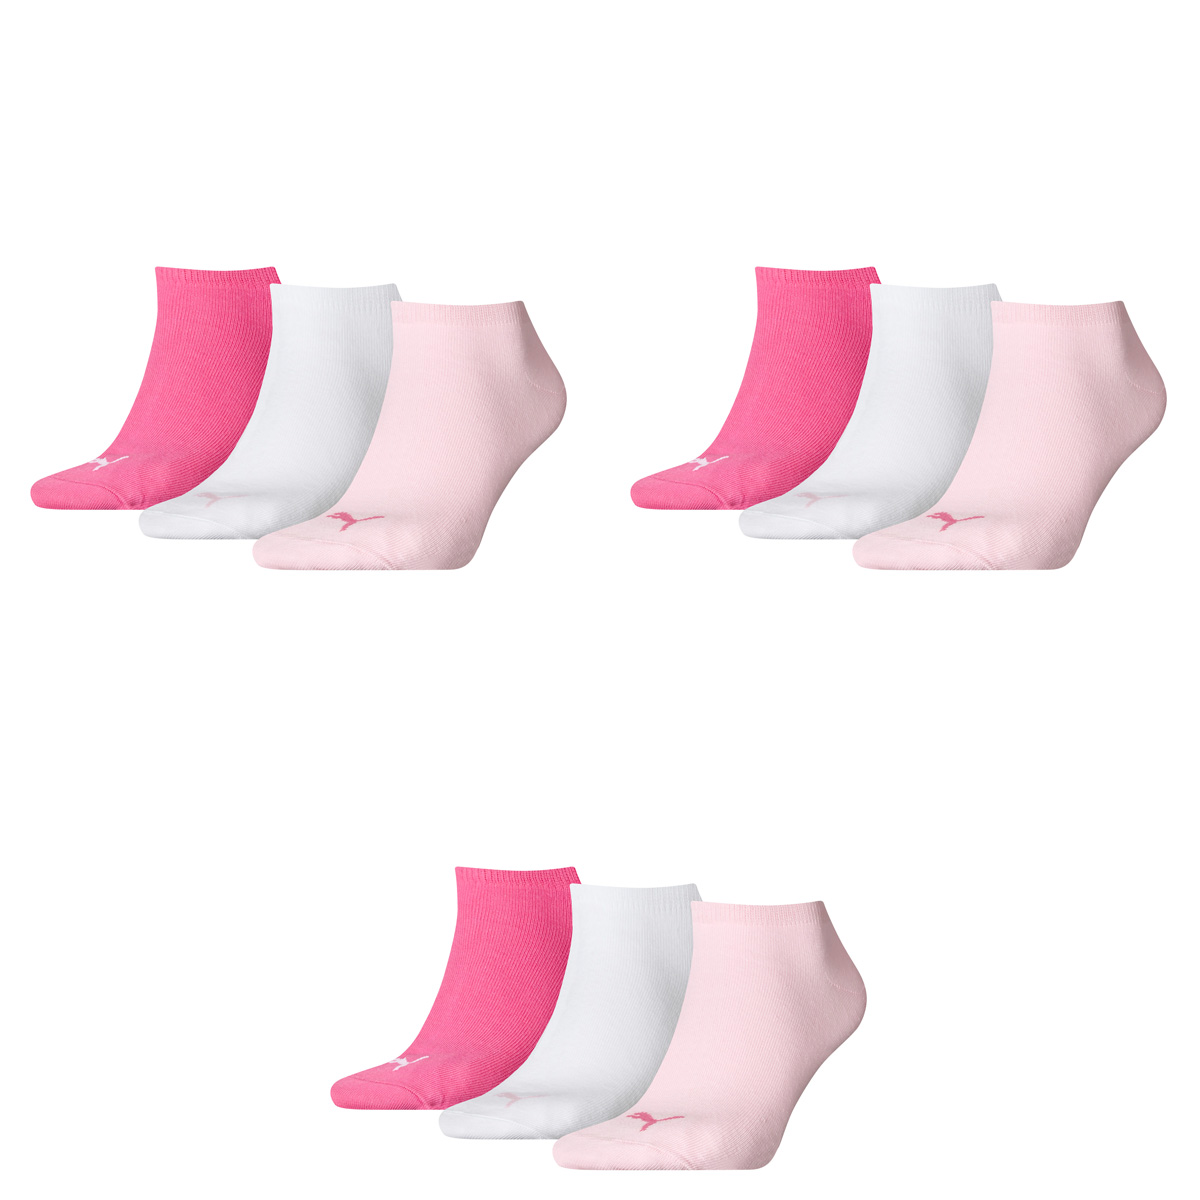 Puma unisex Sneaker Socken Kurzsocken Sportsocken 261080001 15 Paar, Farbe:Mehrfarbig, Menge:15 Paar (5 x 3er Pack), Größe:39-42, Artikel:-422 pink lady